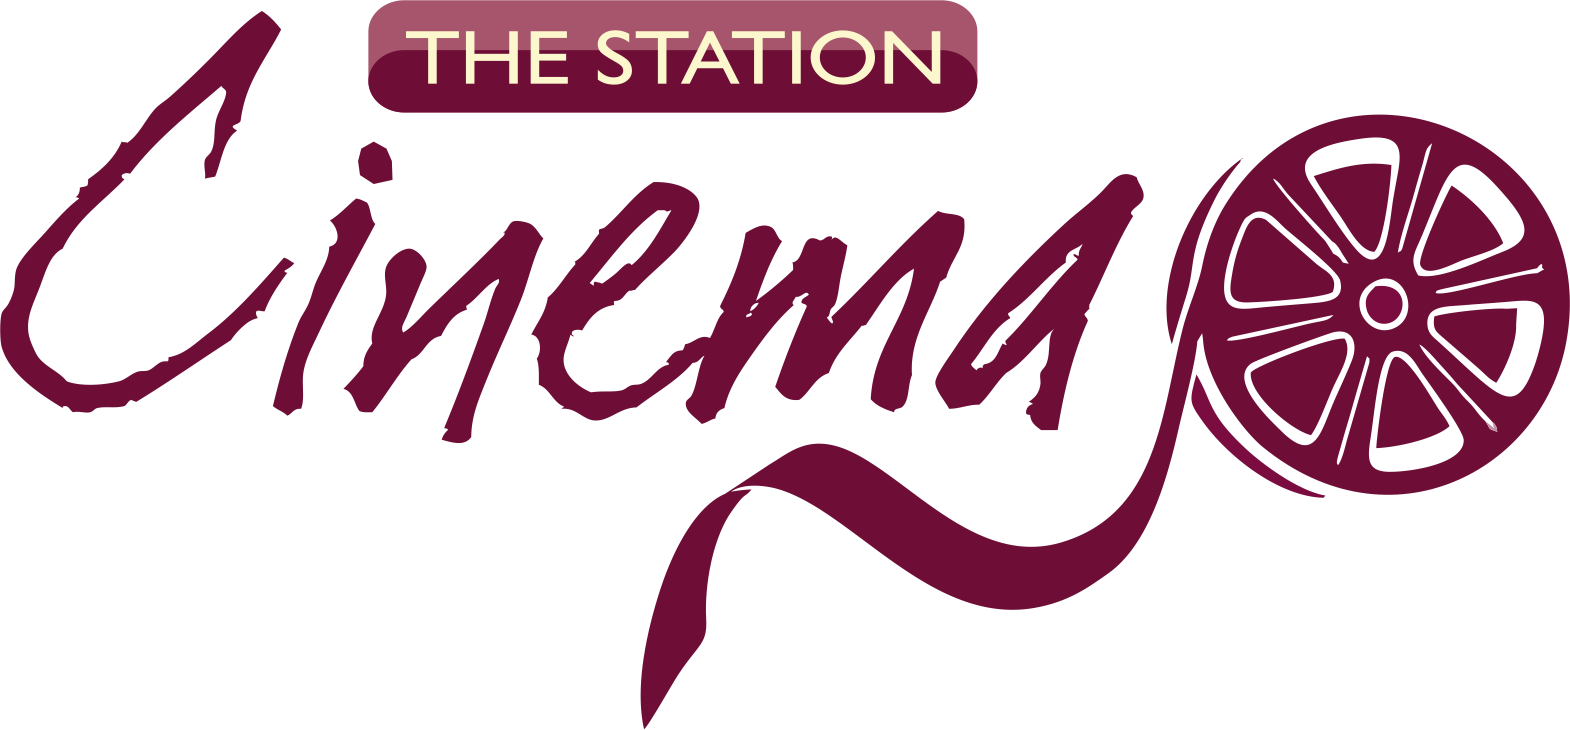 The Station Cinema